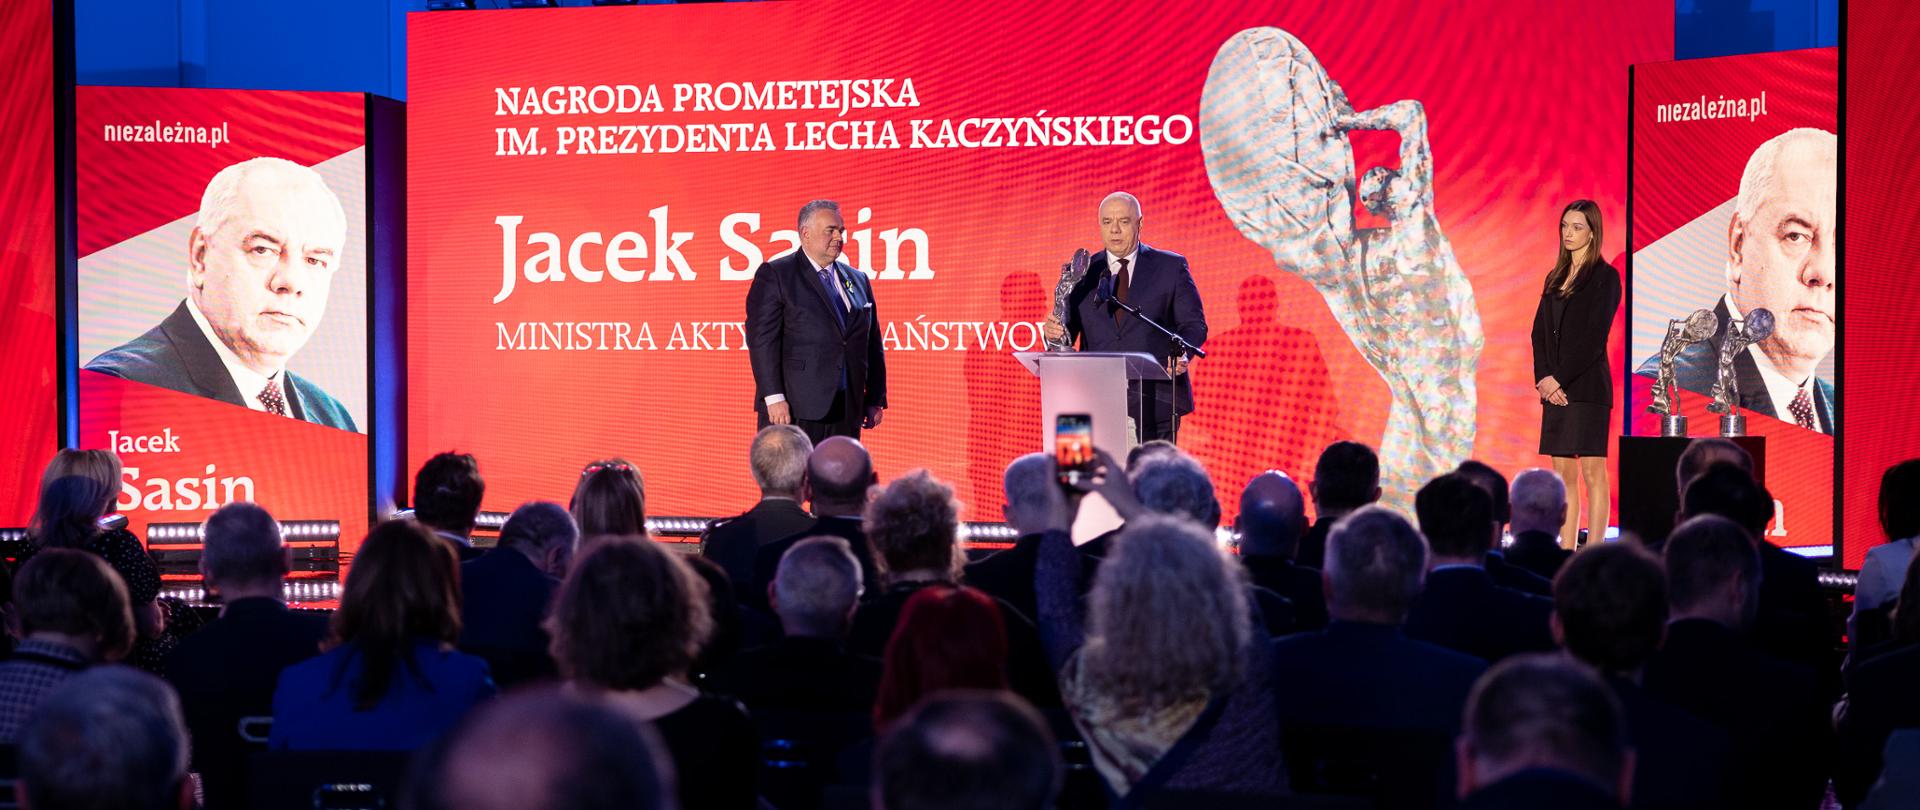 Wicepremier Jacek Sasin podczas gali Nagród Prometejskich